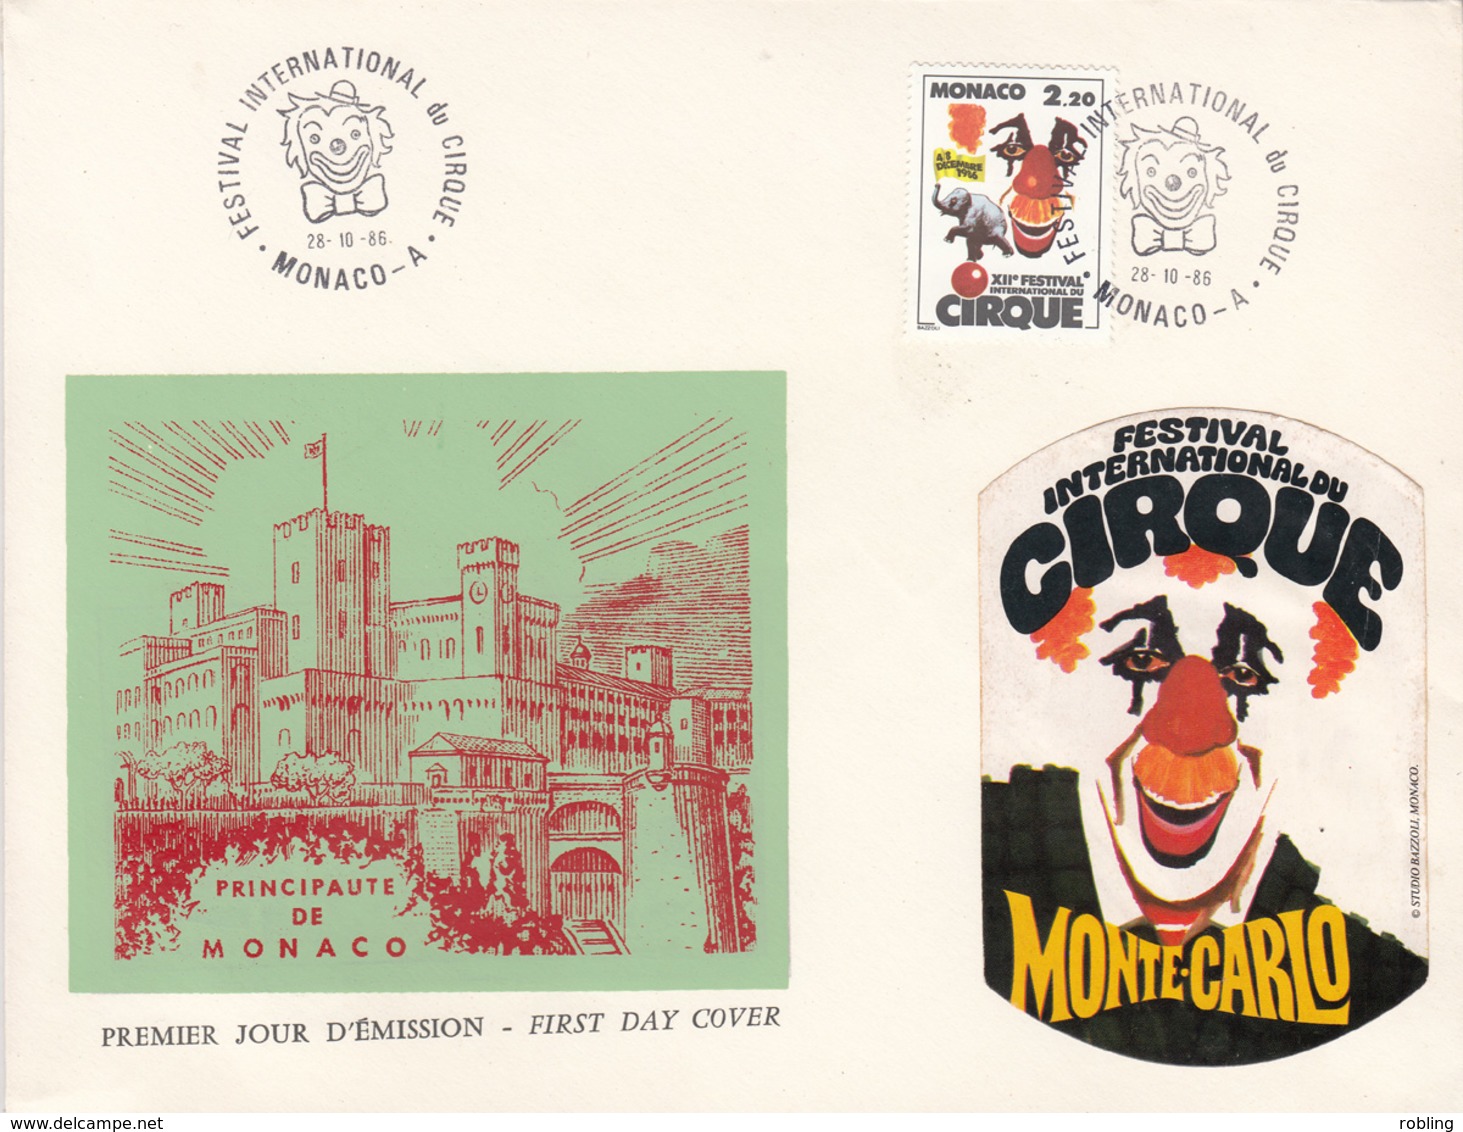 MONACO 1986, Circus Monte Carlo, Michel 1776 FDC 26811 - Cirque